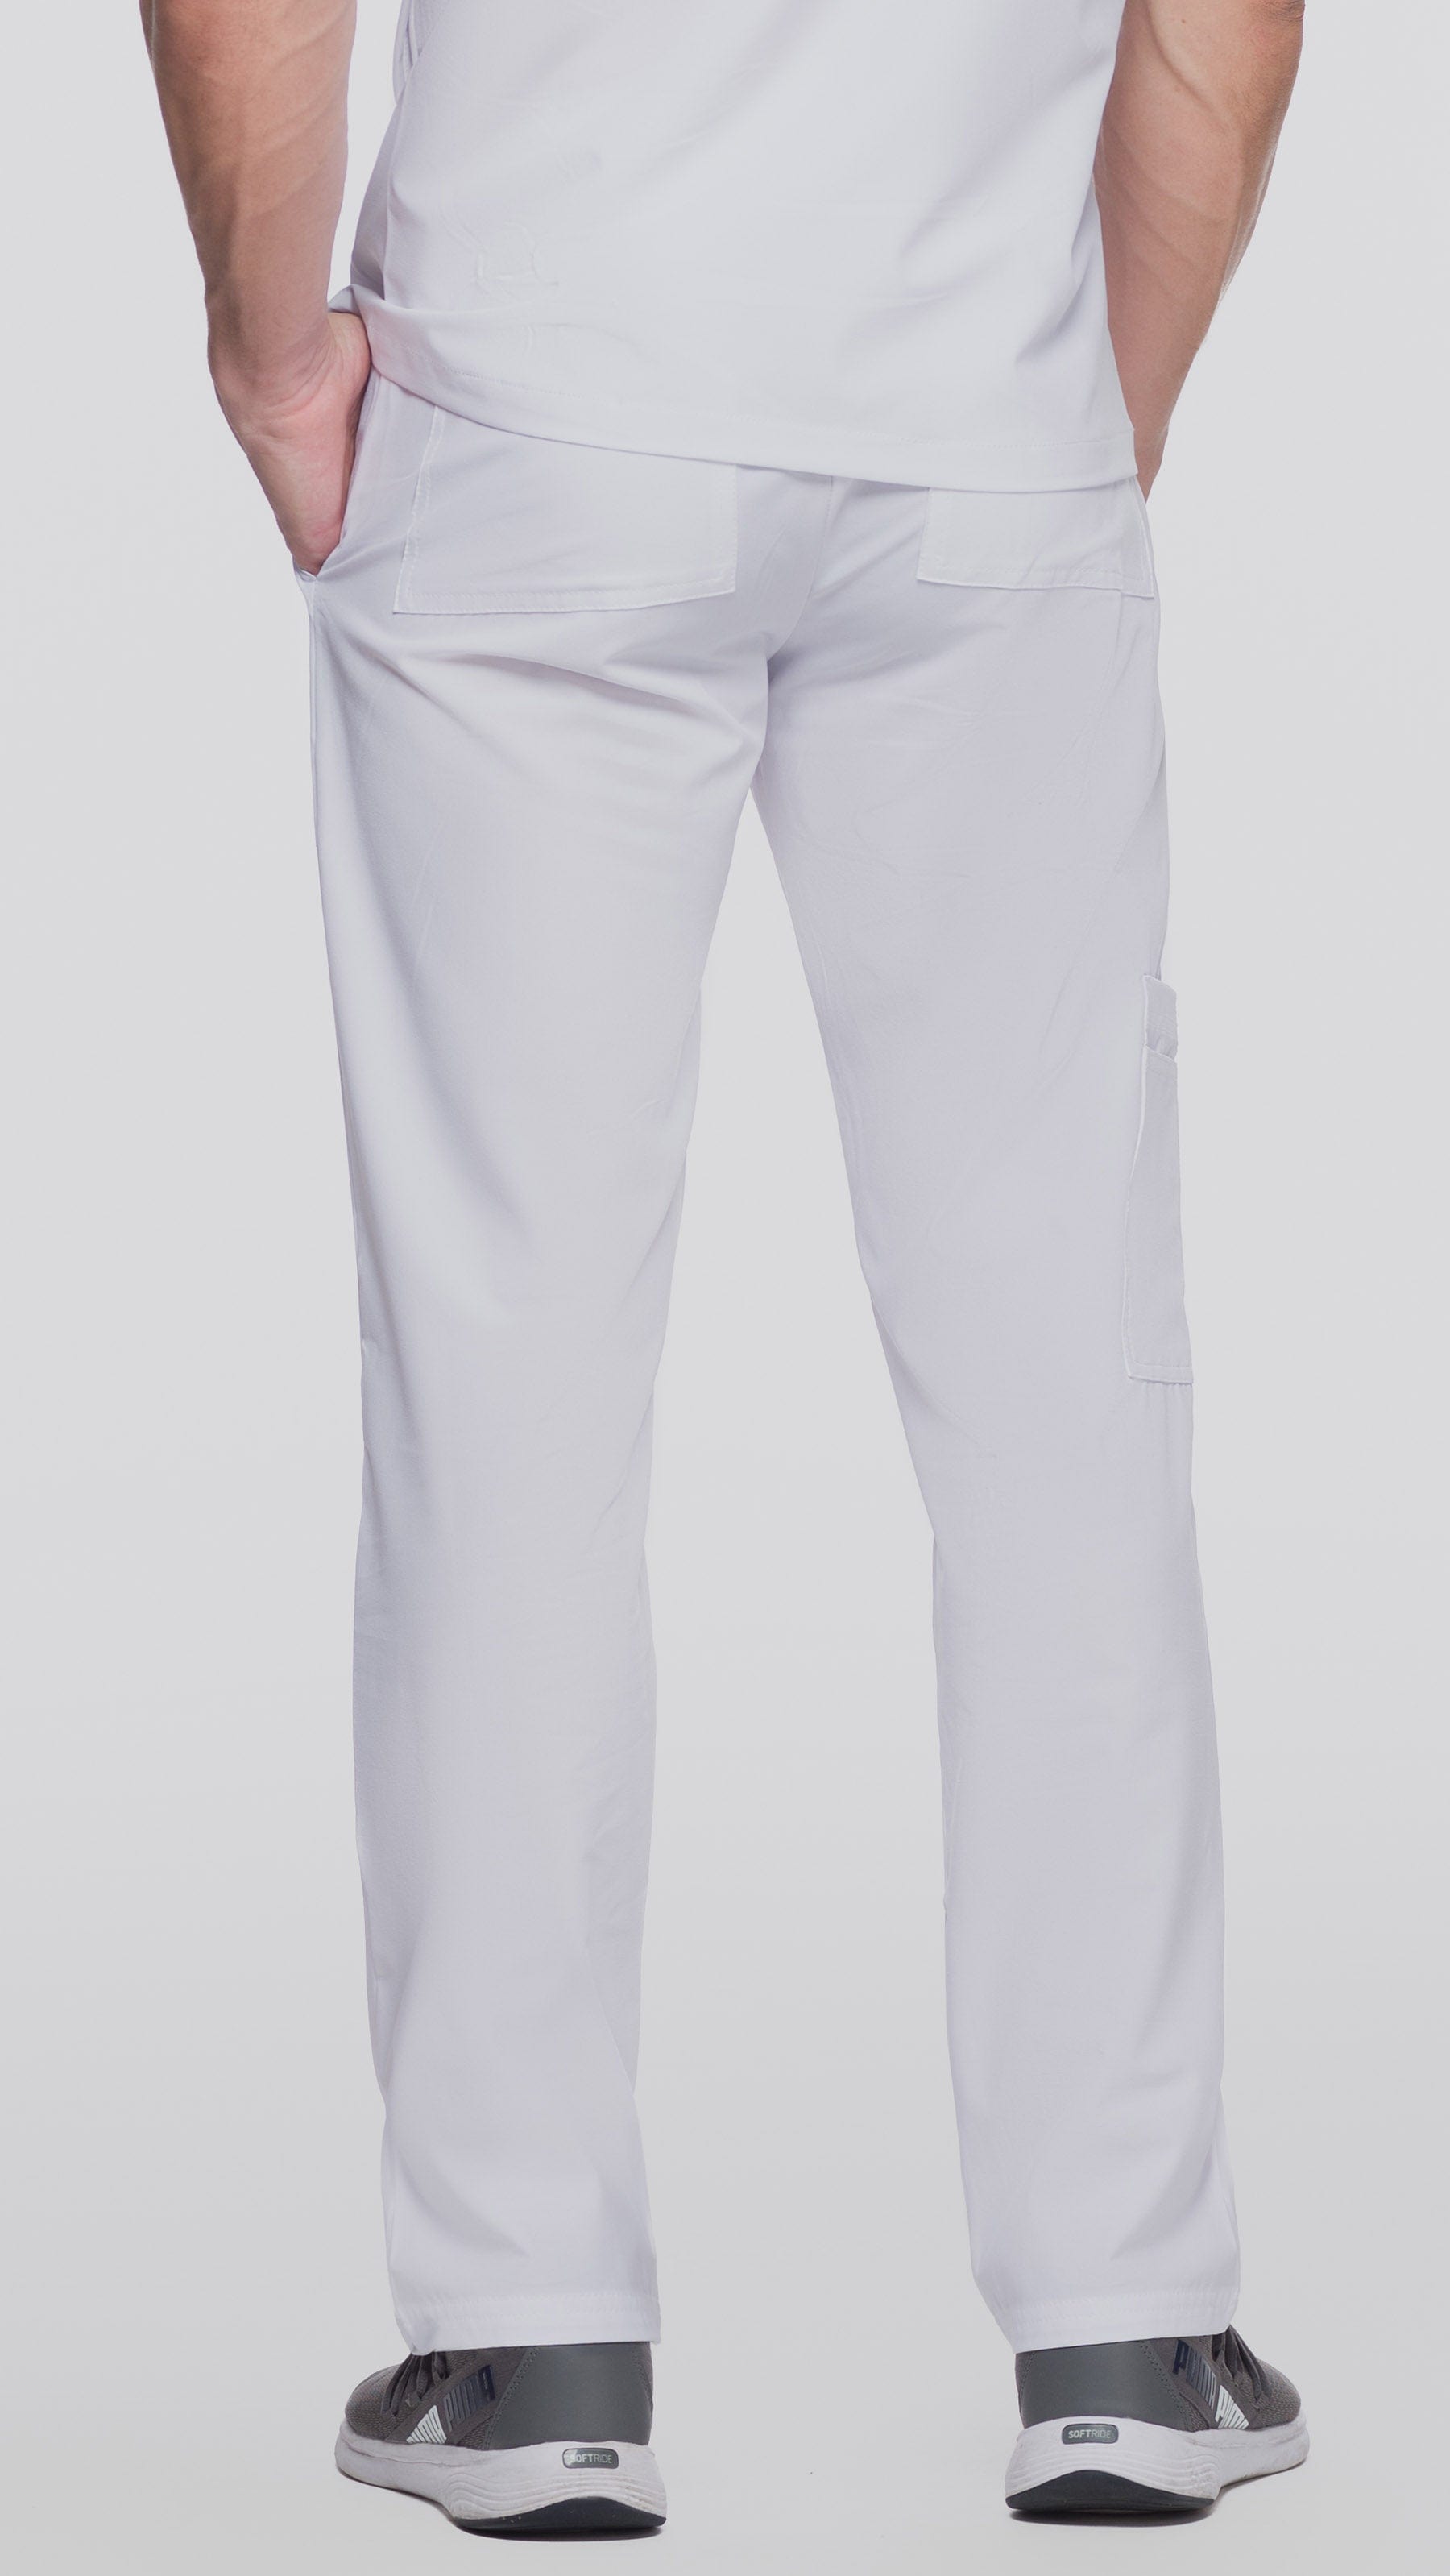 Kanaus® Pants Classic Deep White | Caballero - Kanaus